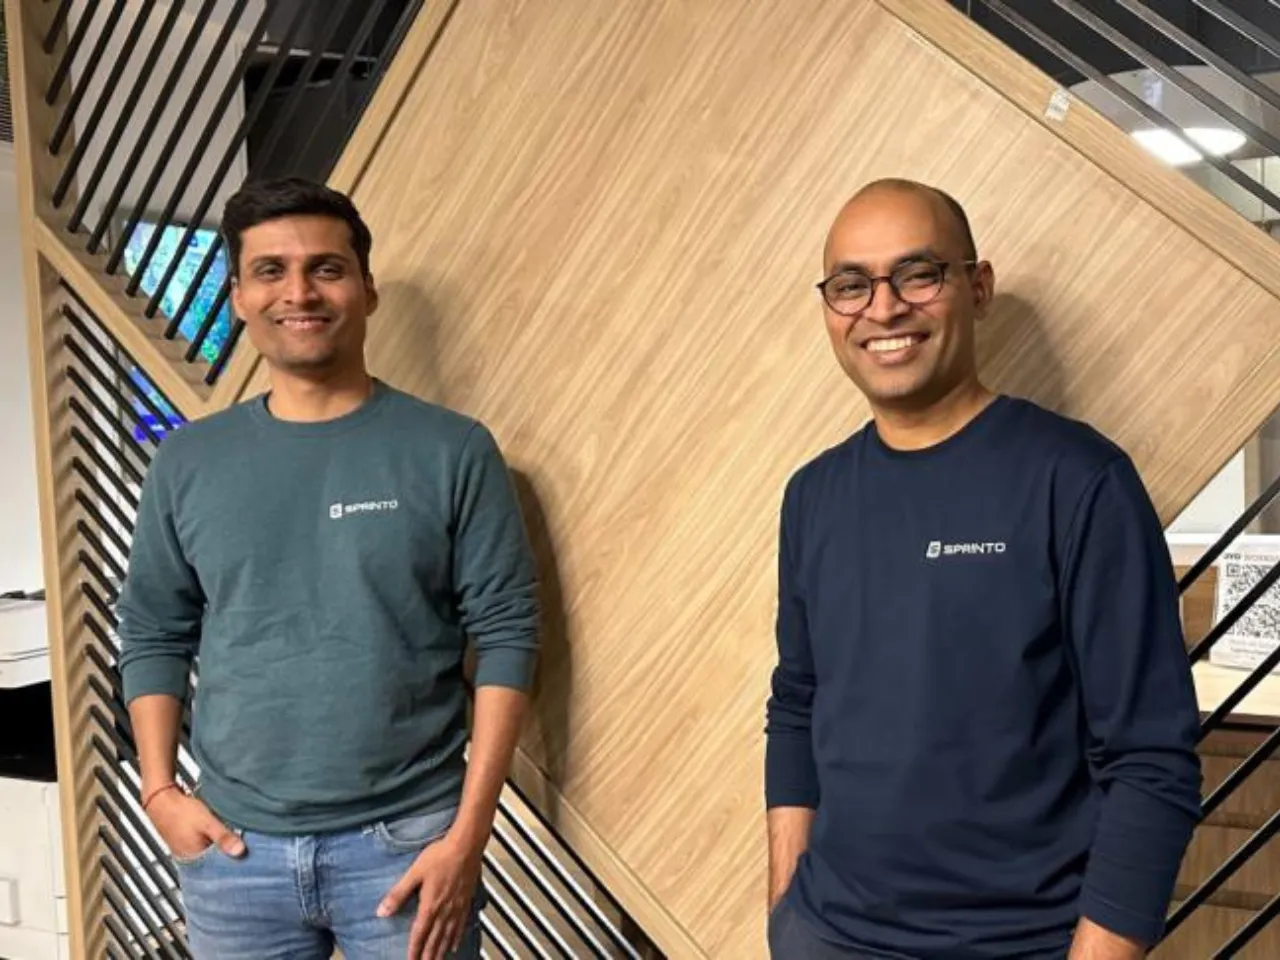 Sprinto founders - Girish Redekar and Raghuveer Kancherla